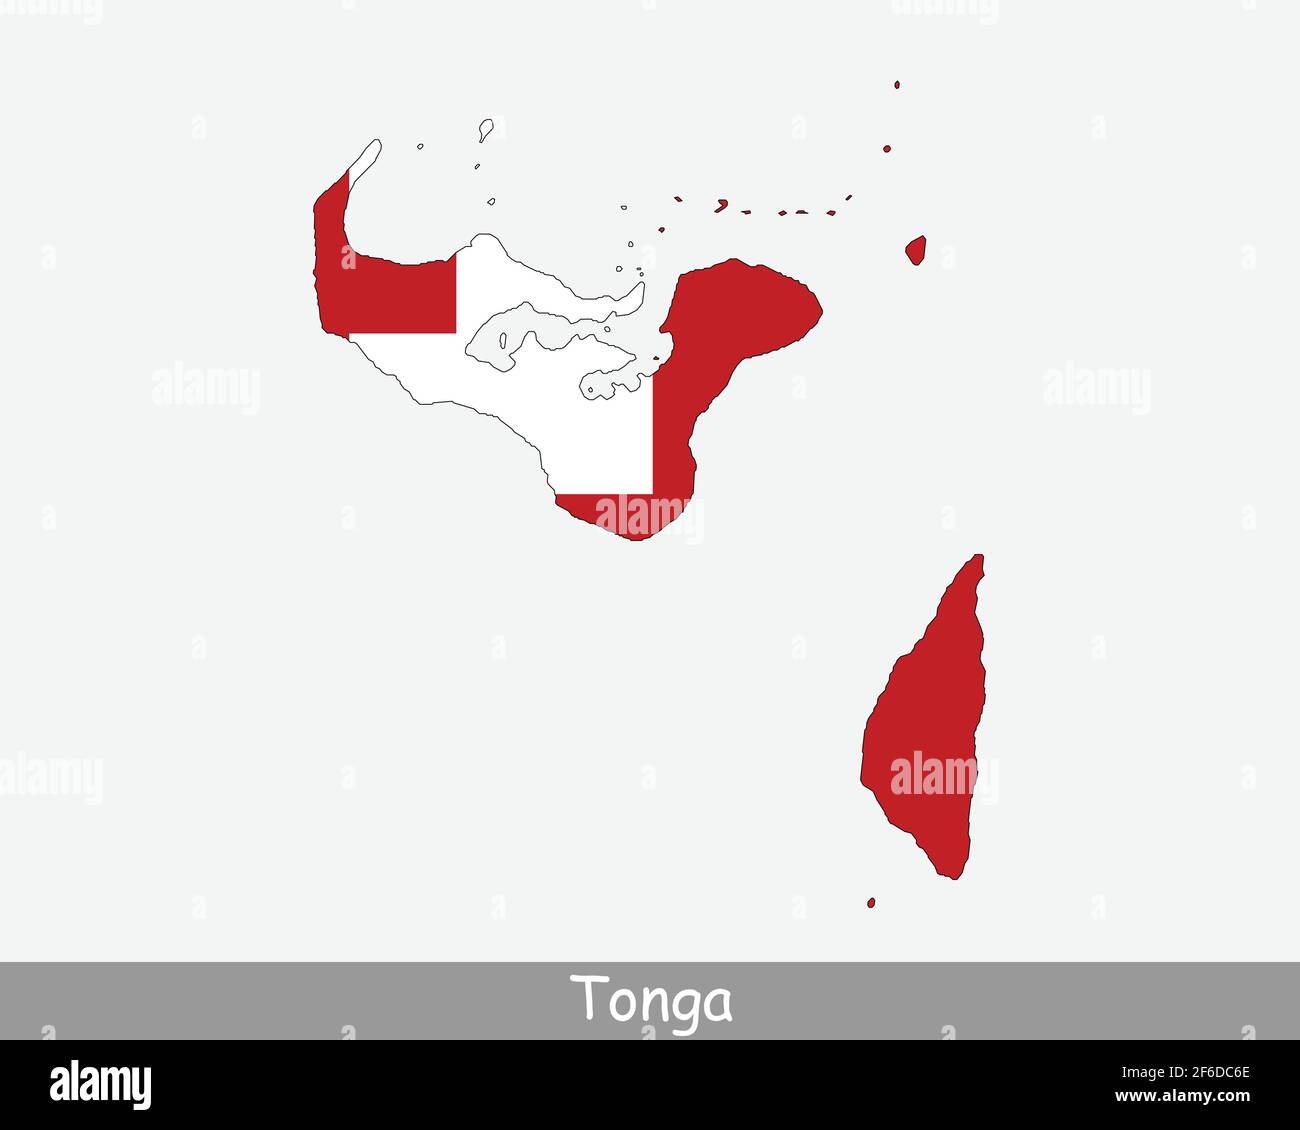 Tonga Flag Karte. Karte des Königreichs Tonga mit der Tongaer Nationalflagge isoliert auf weißem Hintergrund. Vektorgrafik. Stock Vektor